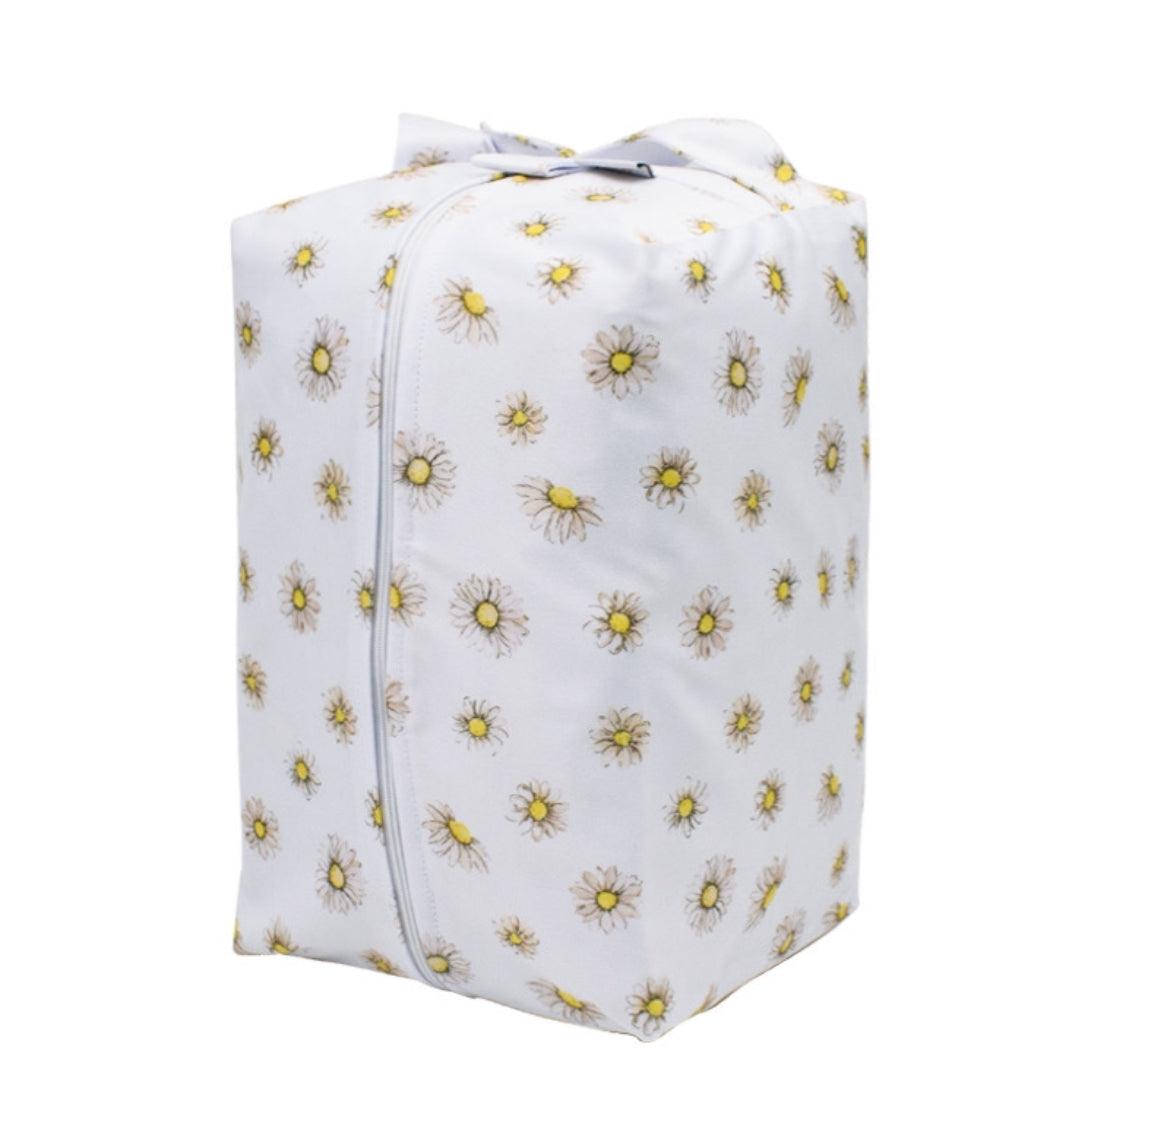 Yoho Baby & co. Explorer Travel Nappy Bags/Pods NZ. Reusable Storage Bags for Nappies. Gorgeous White Daisies Designer Print